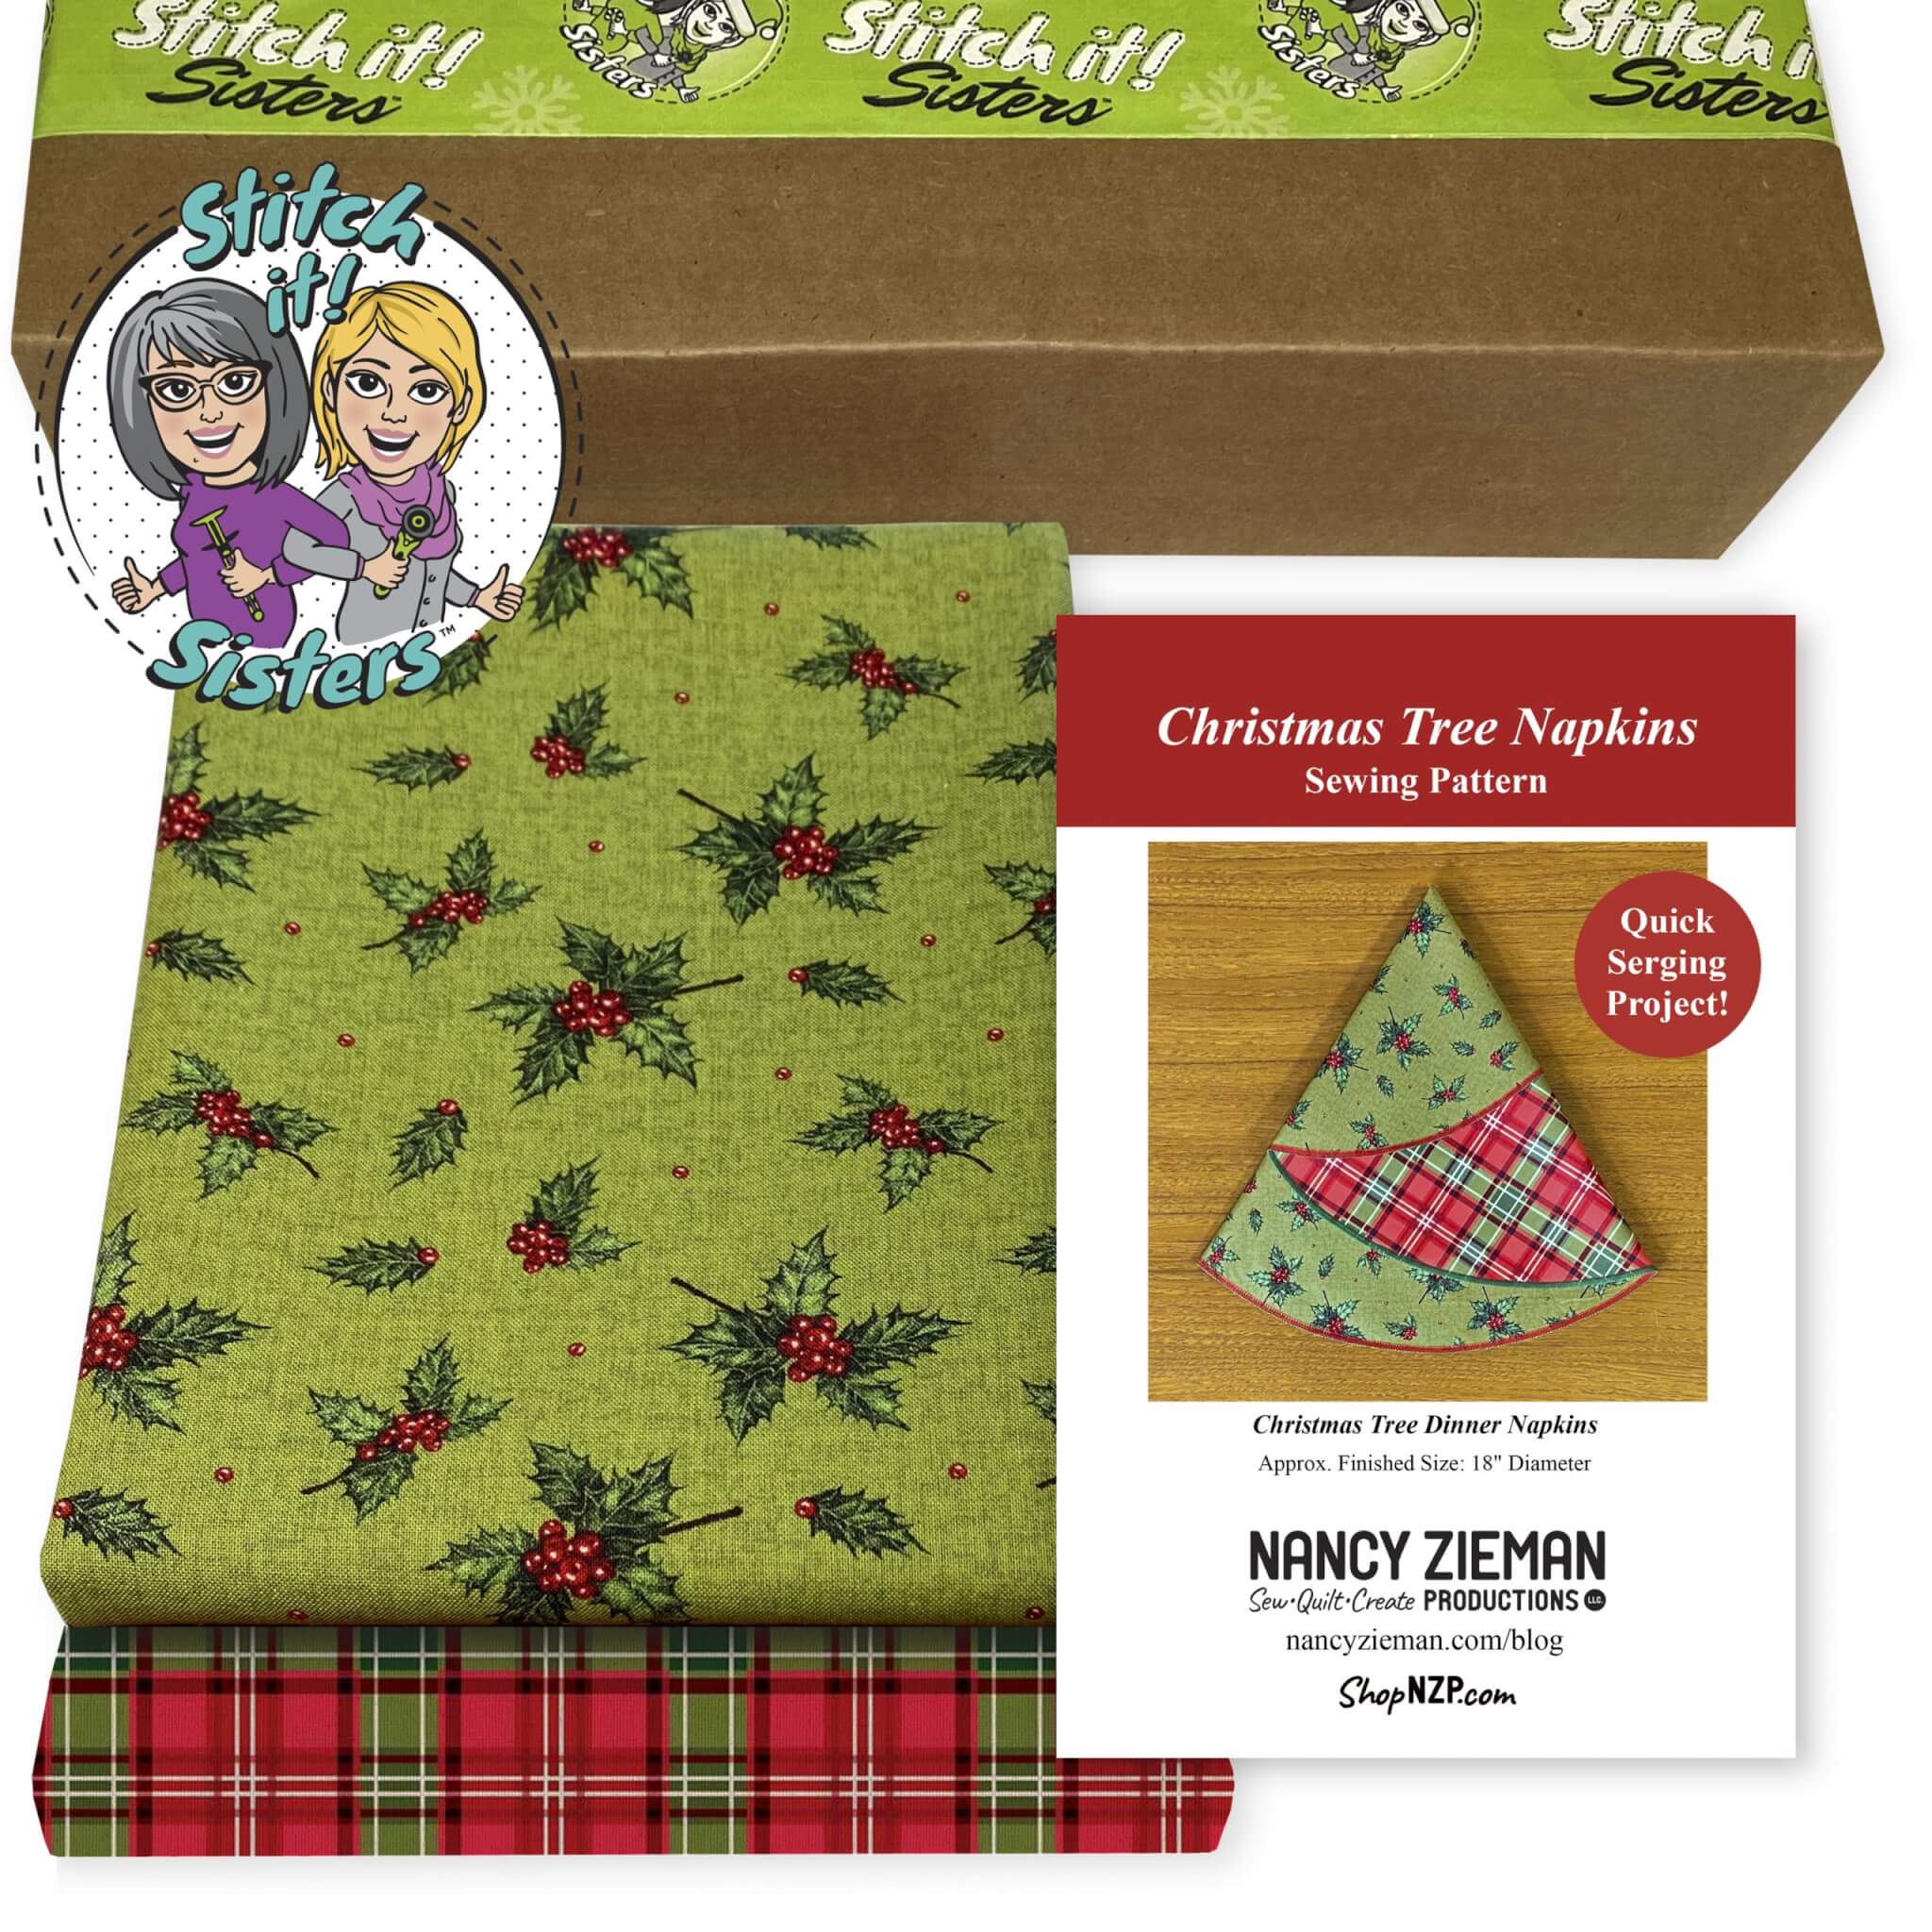 NEW! Christmas Tree Napkins Bundle Box Available at ShopNZP.com at Nancy Zieman Productions